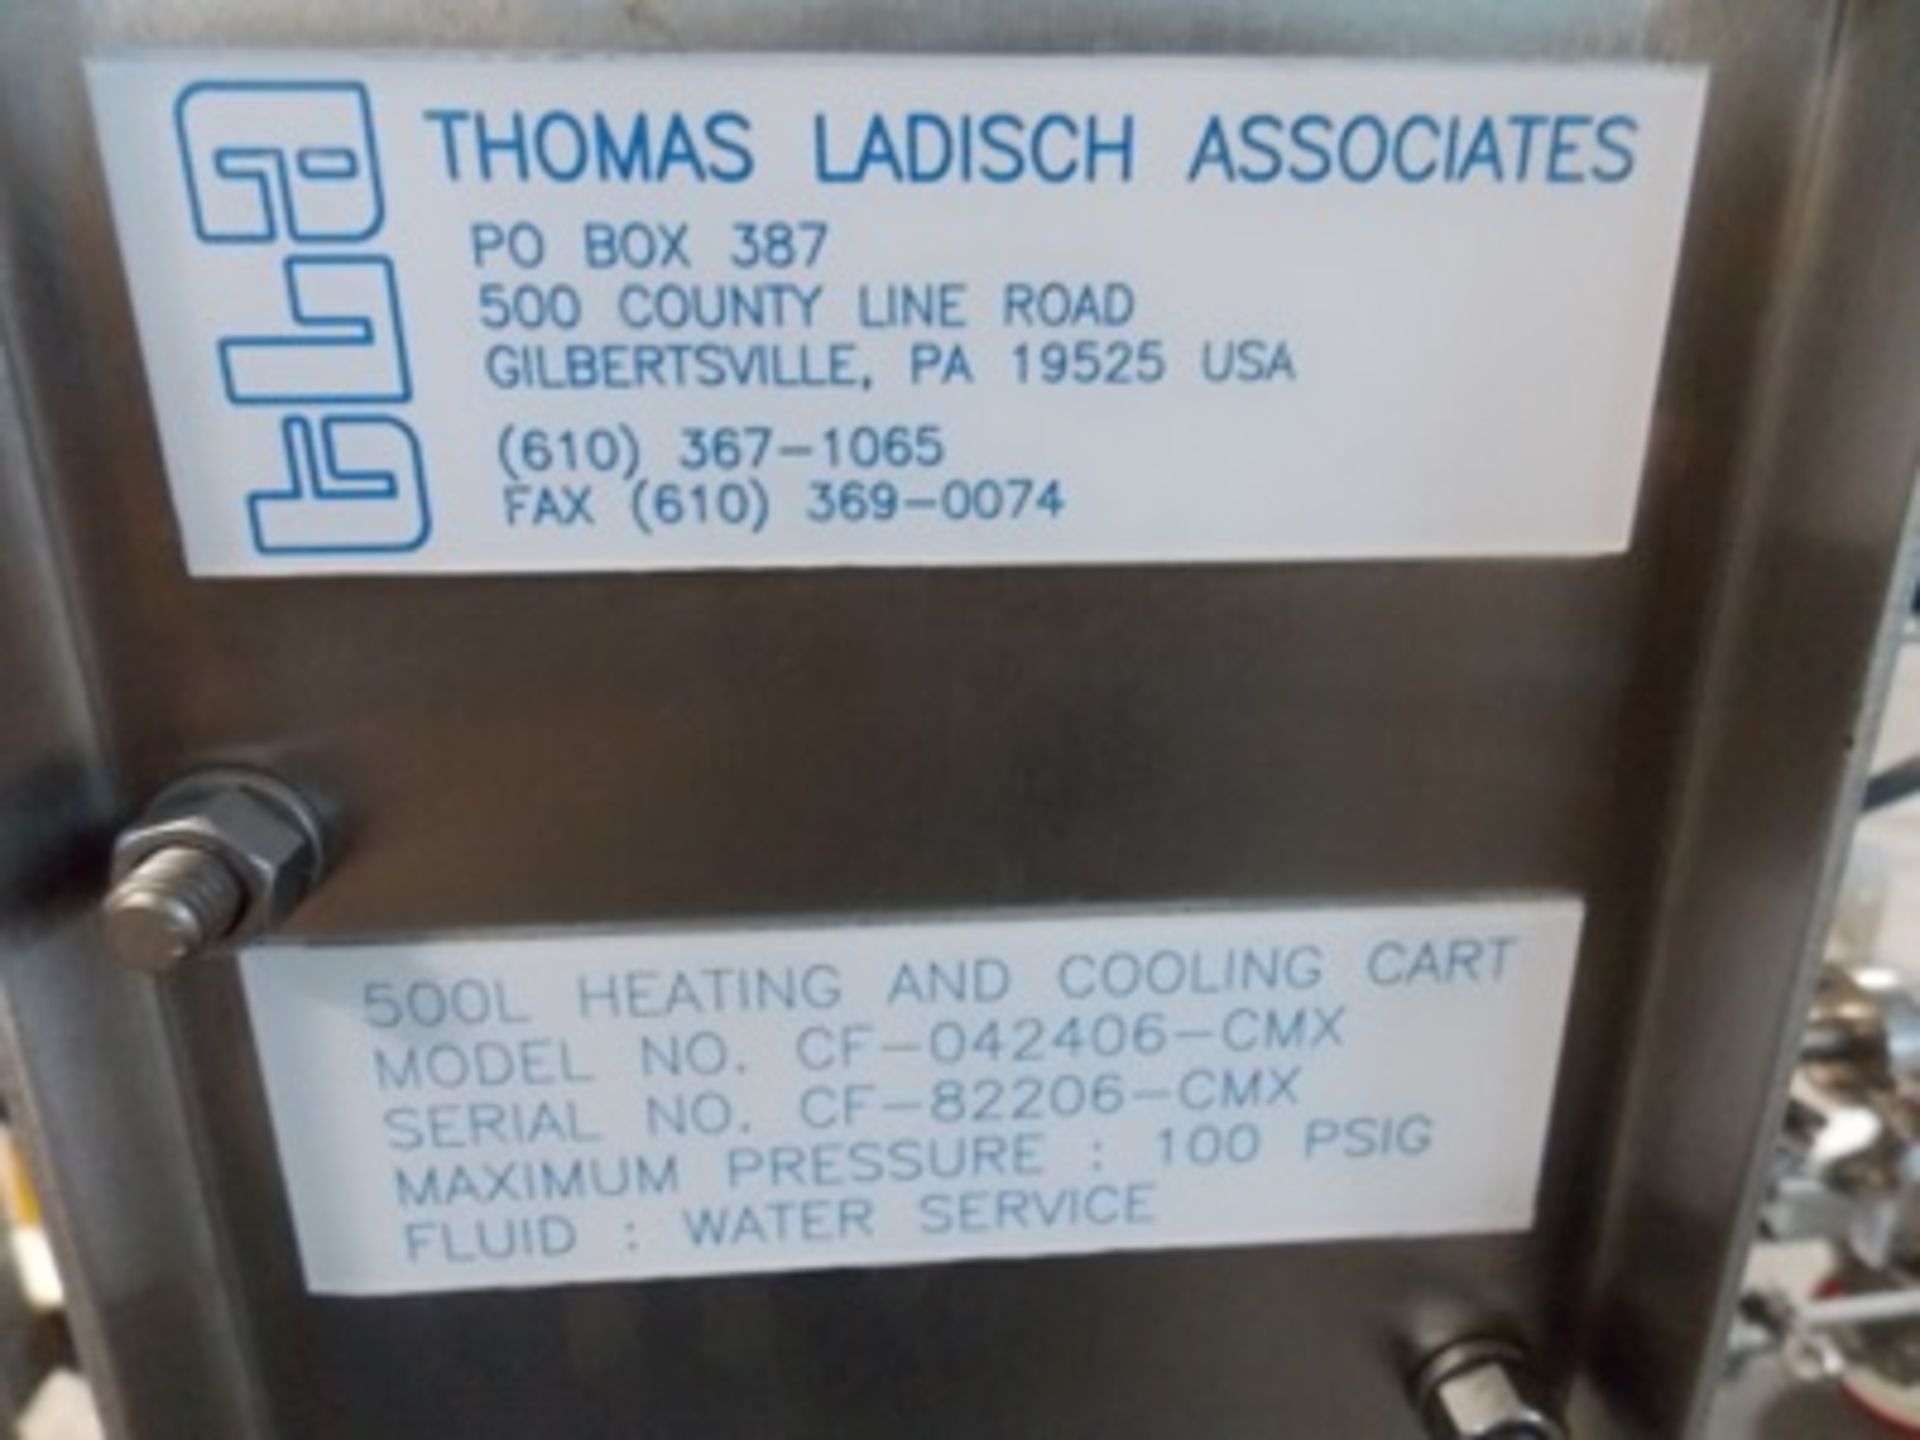 Thames Ladish Assoc. mod. CF-042406-CMX Heating & Cooling System, max Pressure 100 PSIG, 3/4hp - Image 6 of 6